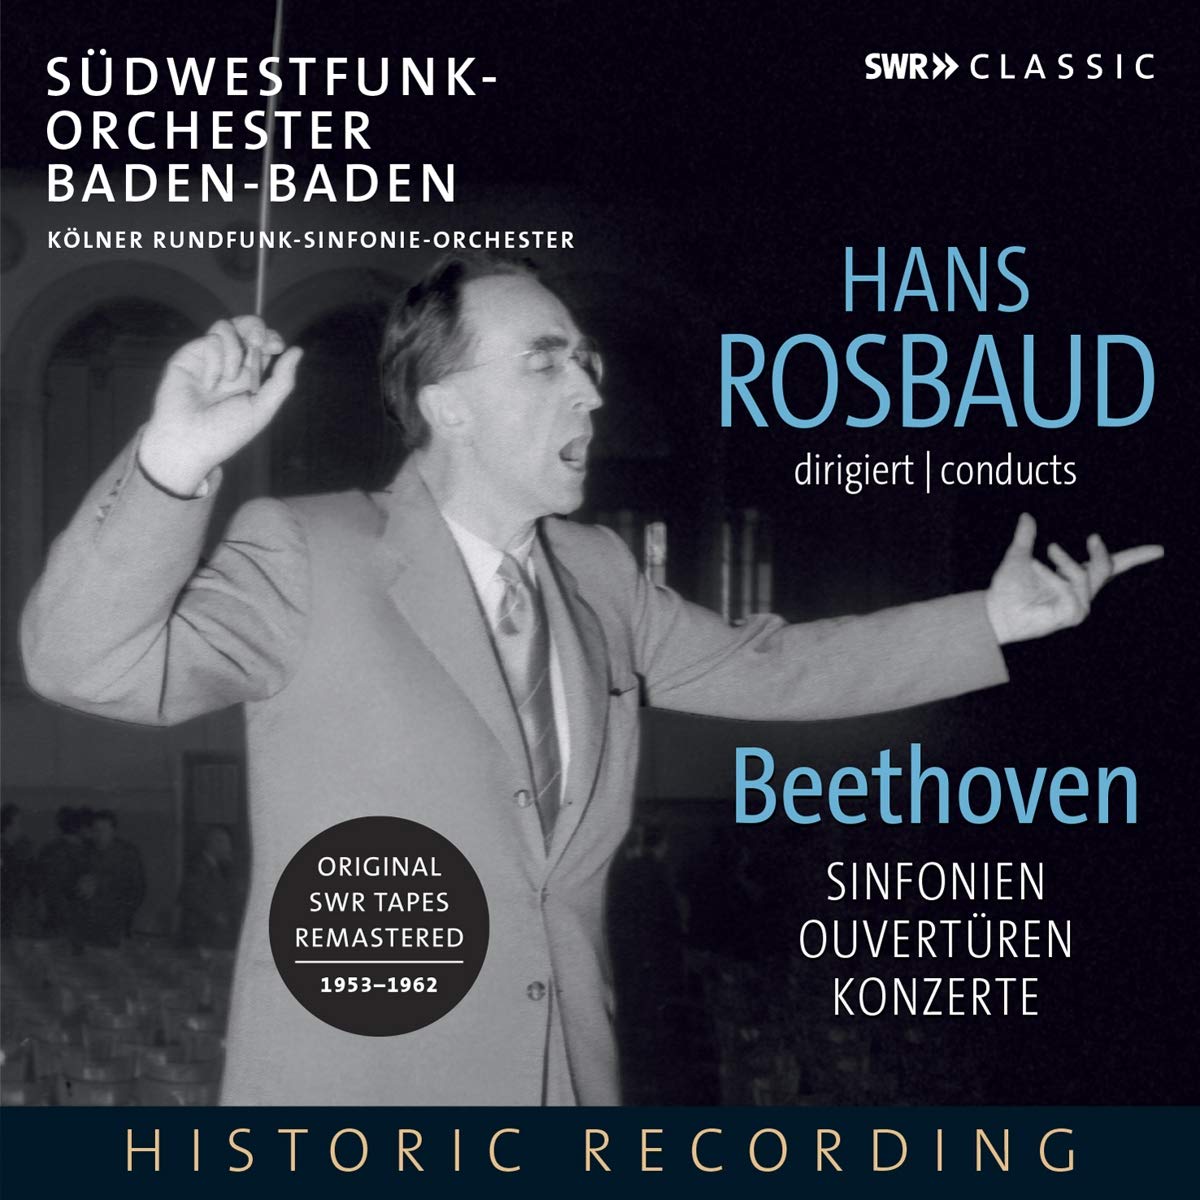 Audio Cd Ludwig Van Beethoven - Hans Rosbaud Dirigiert Beethoven (7 Cd) NUOVO SIGILLATO, EDIZIONE DEL 10/04/2020 SUBITO DISPONIBILE